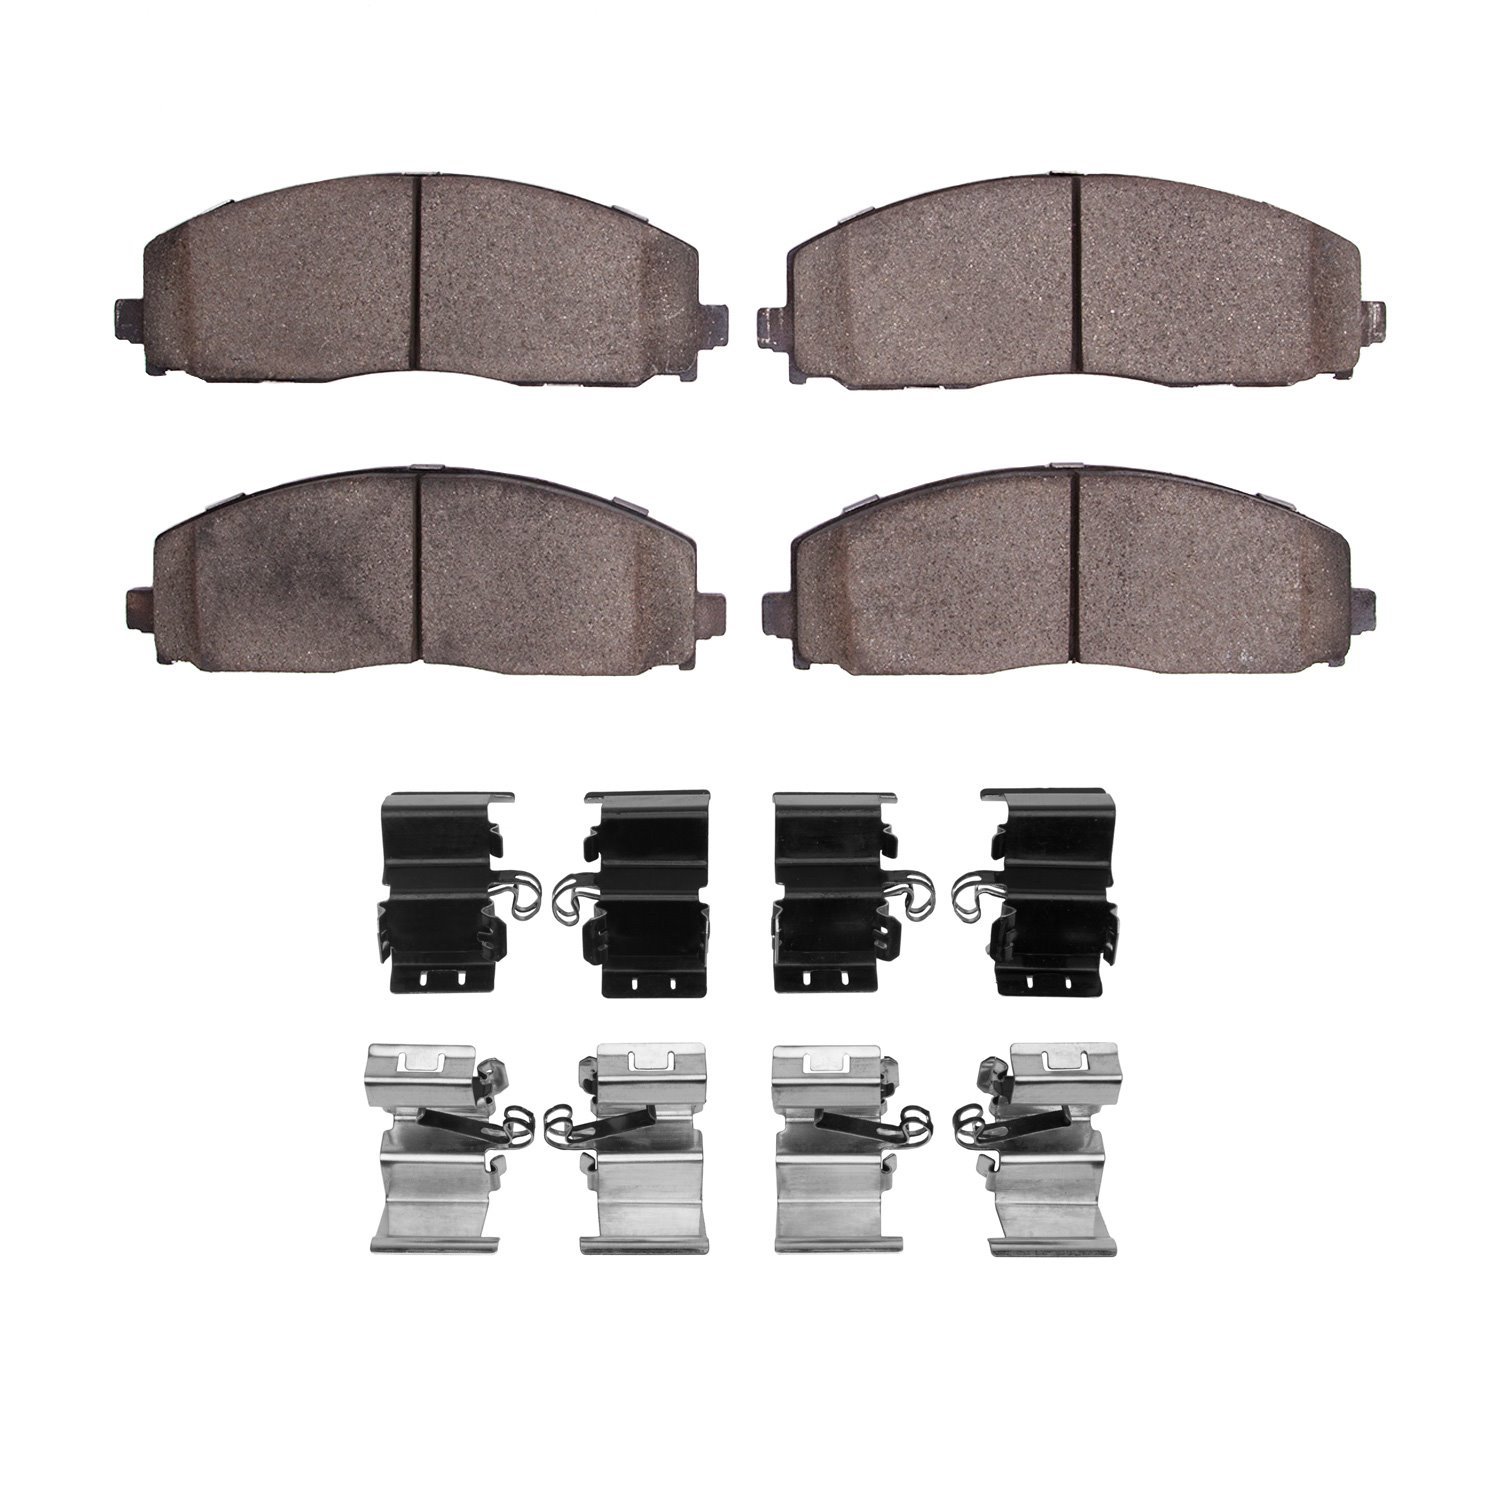 1600-1589-01 5000 Euro Ceramic Brake Pads & Hardware Kit, Fits Select Multiple Makes/Models, Position: Front